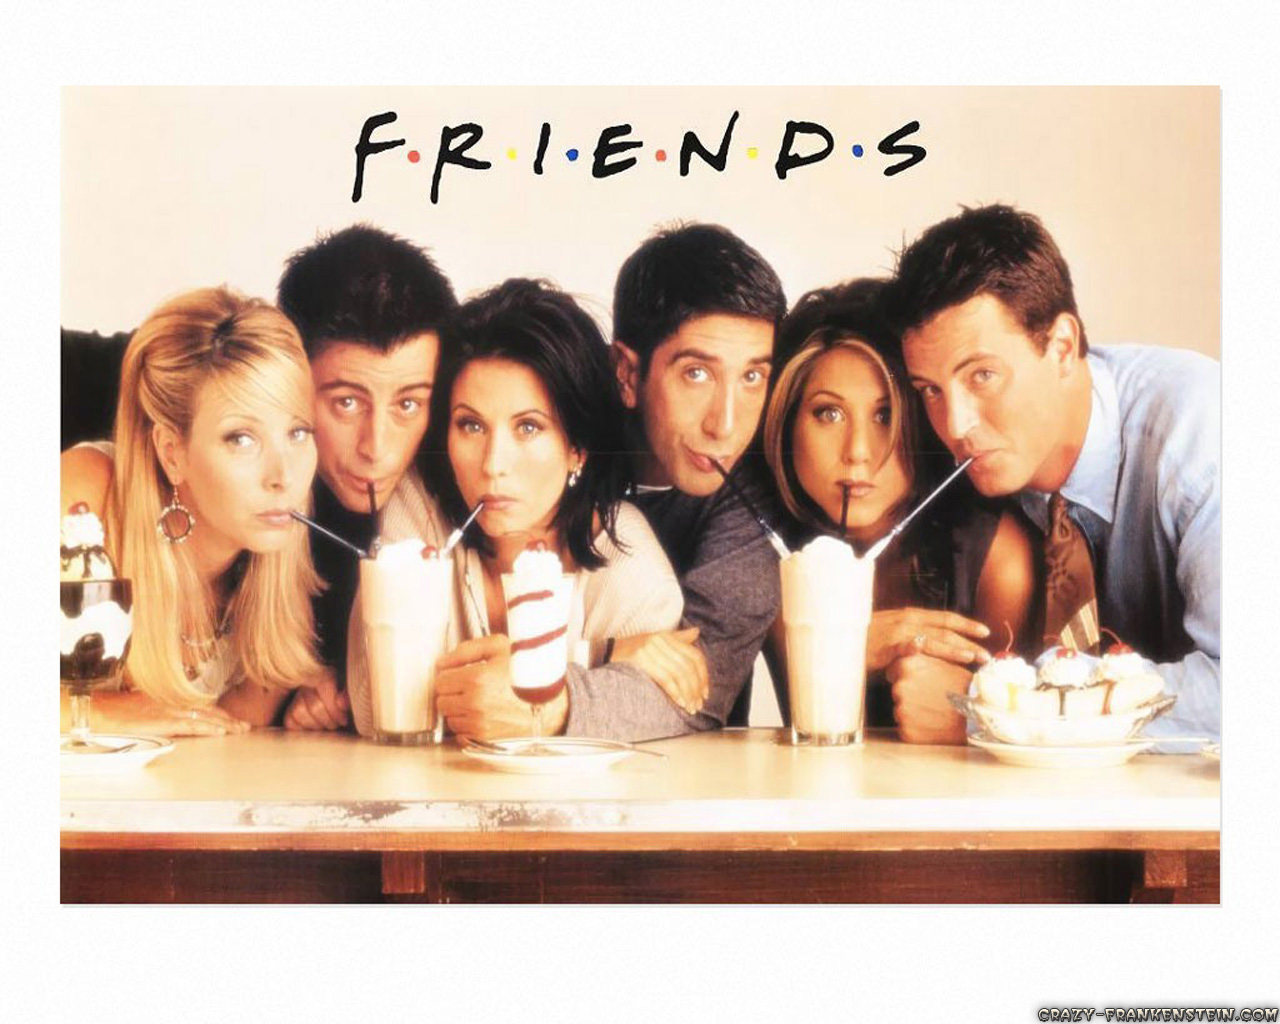 Intros bastardes: ‘Friends’ (1994-2004). Doble aniversari